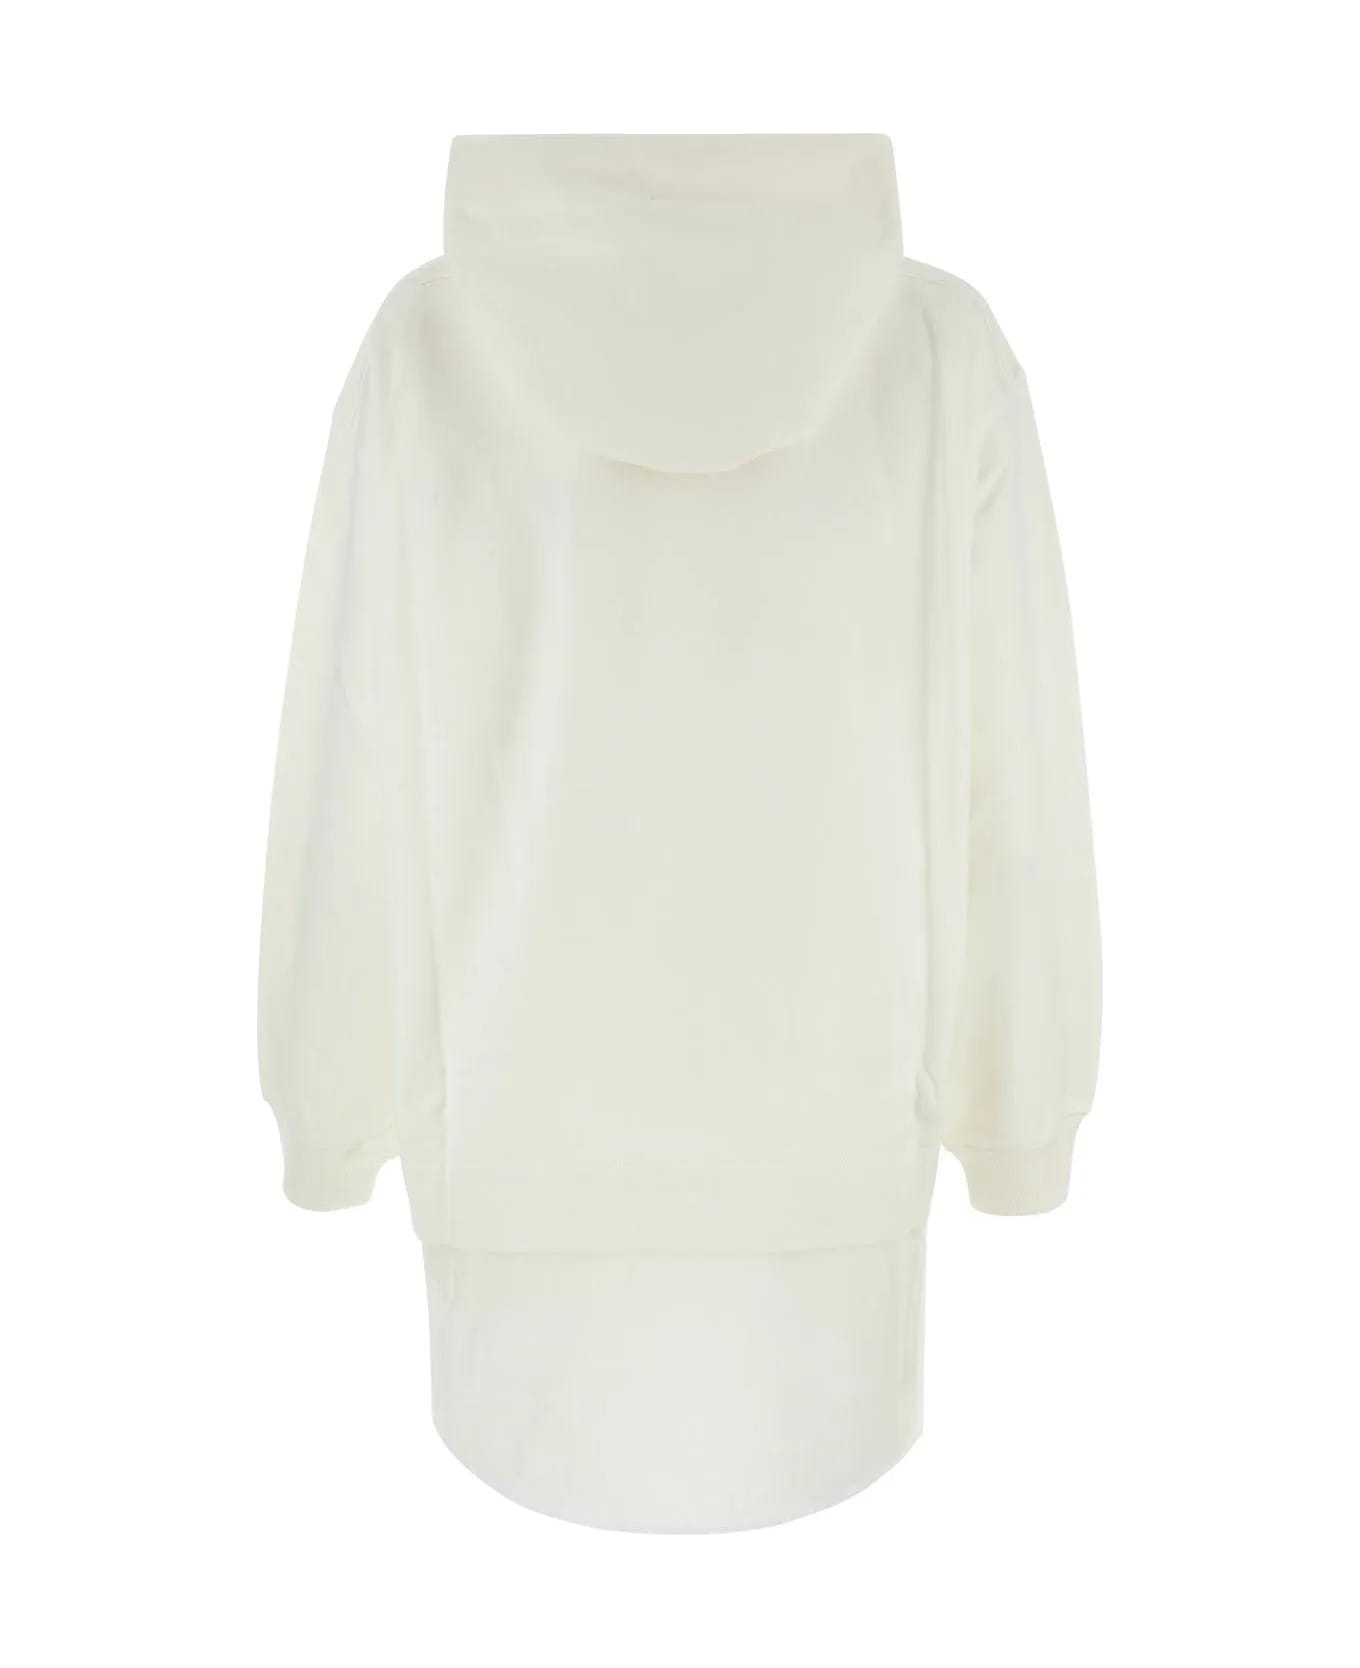 Patou Ivory Cotton Oversize Sweatshirt - A White ブラウス